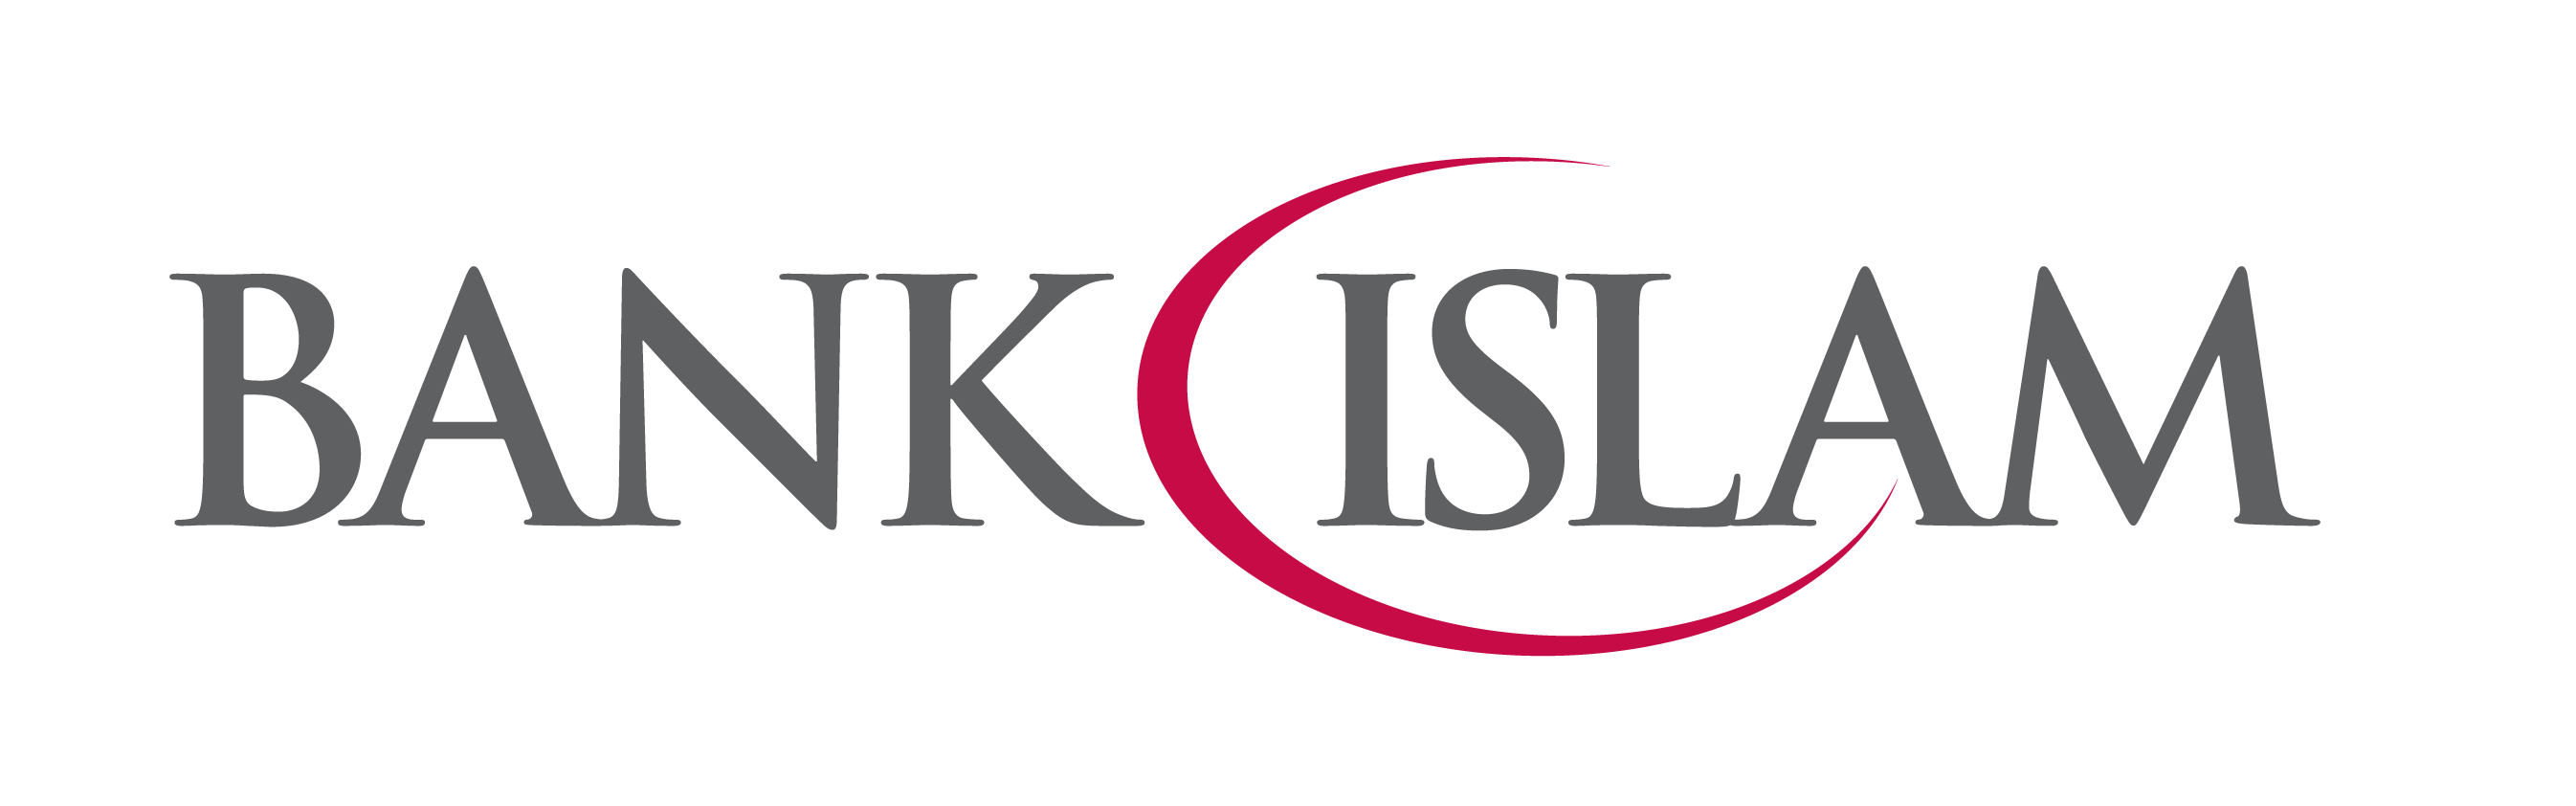 Bank Islam Logo photo - 1